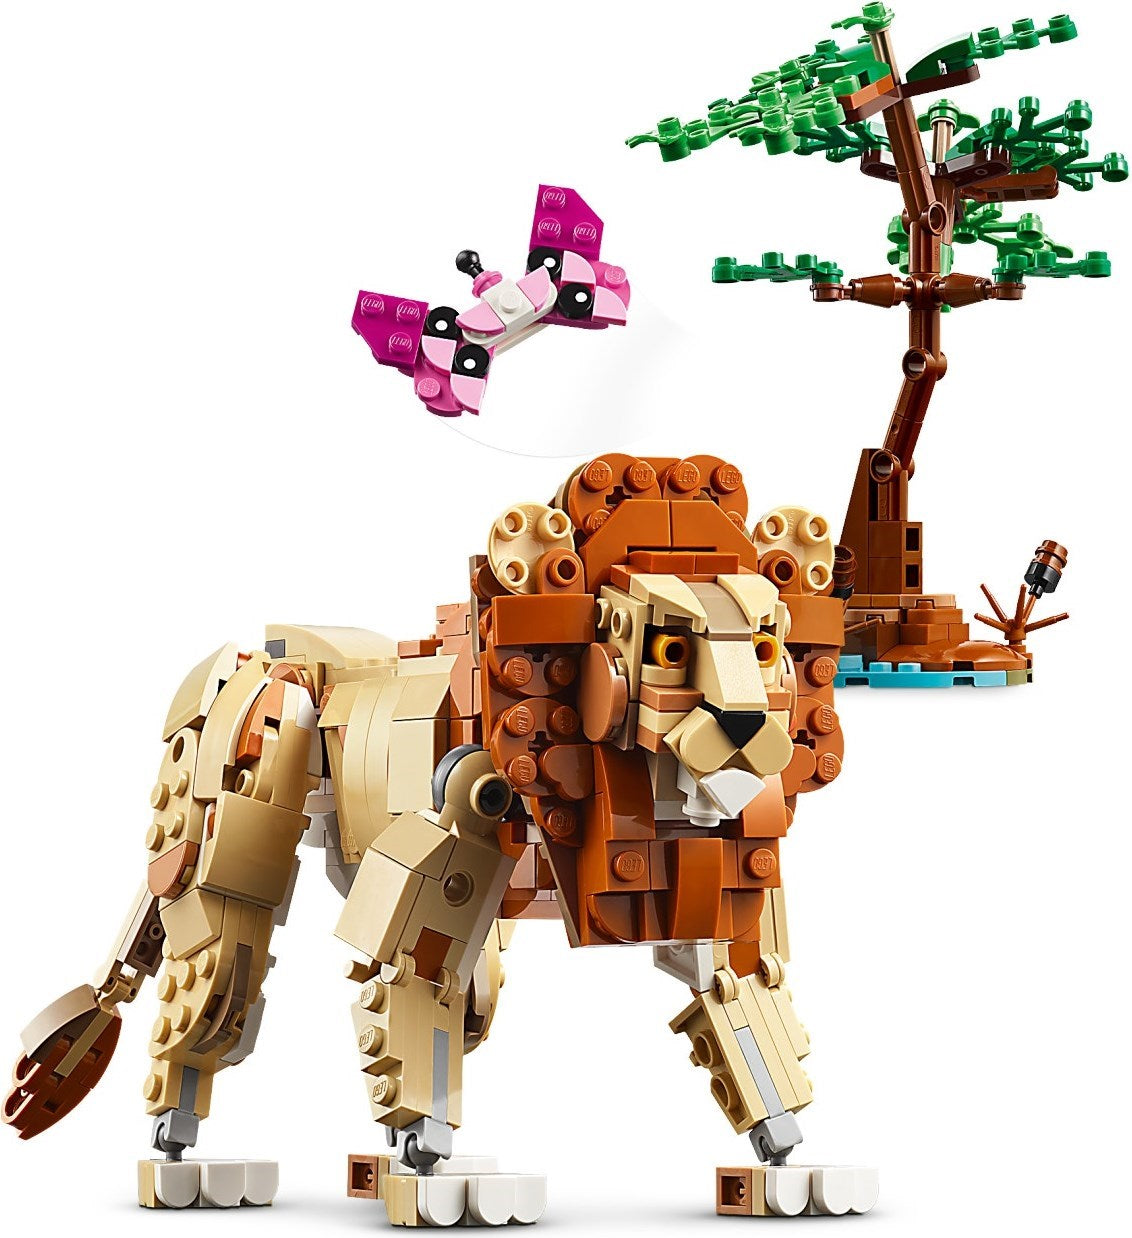 LEGO 31150 Wild Safari Animals